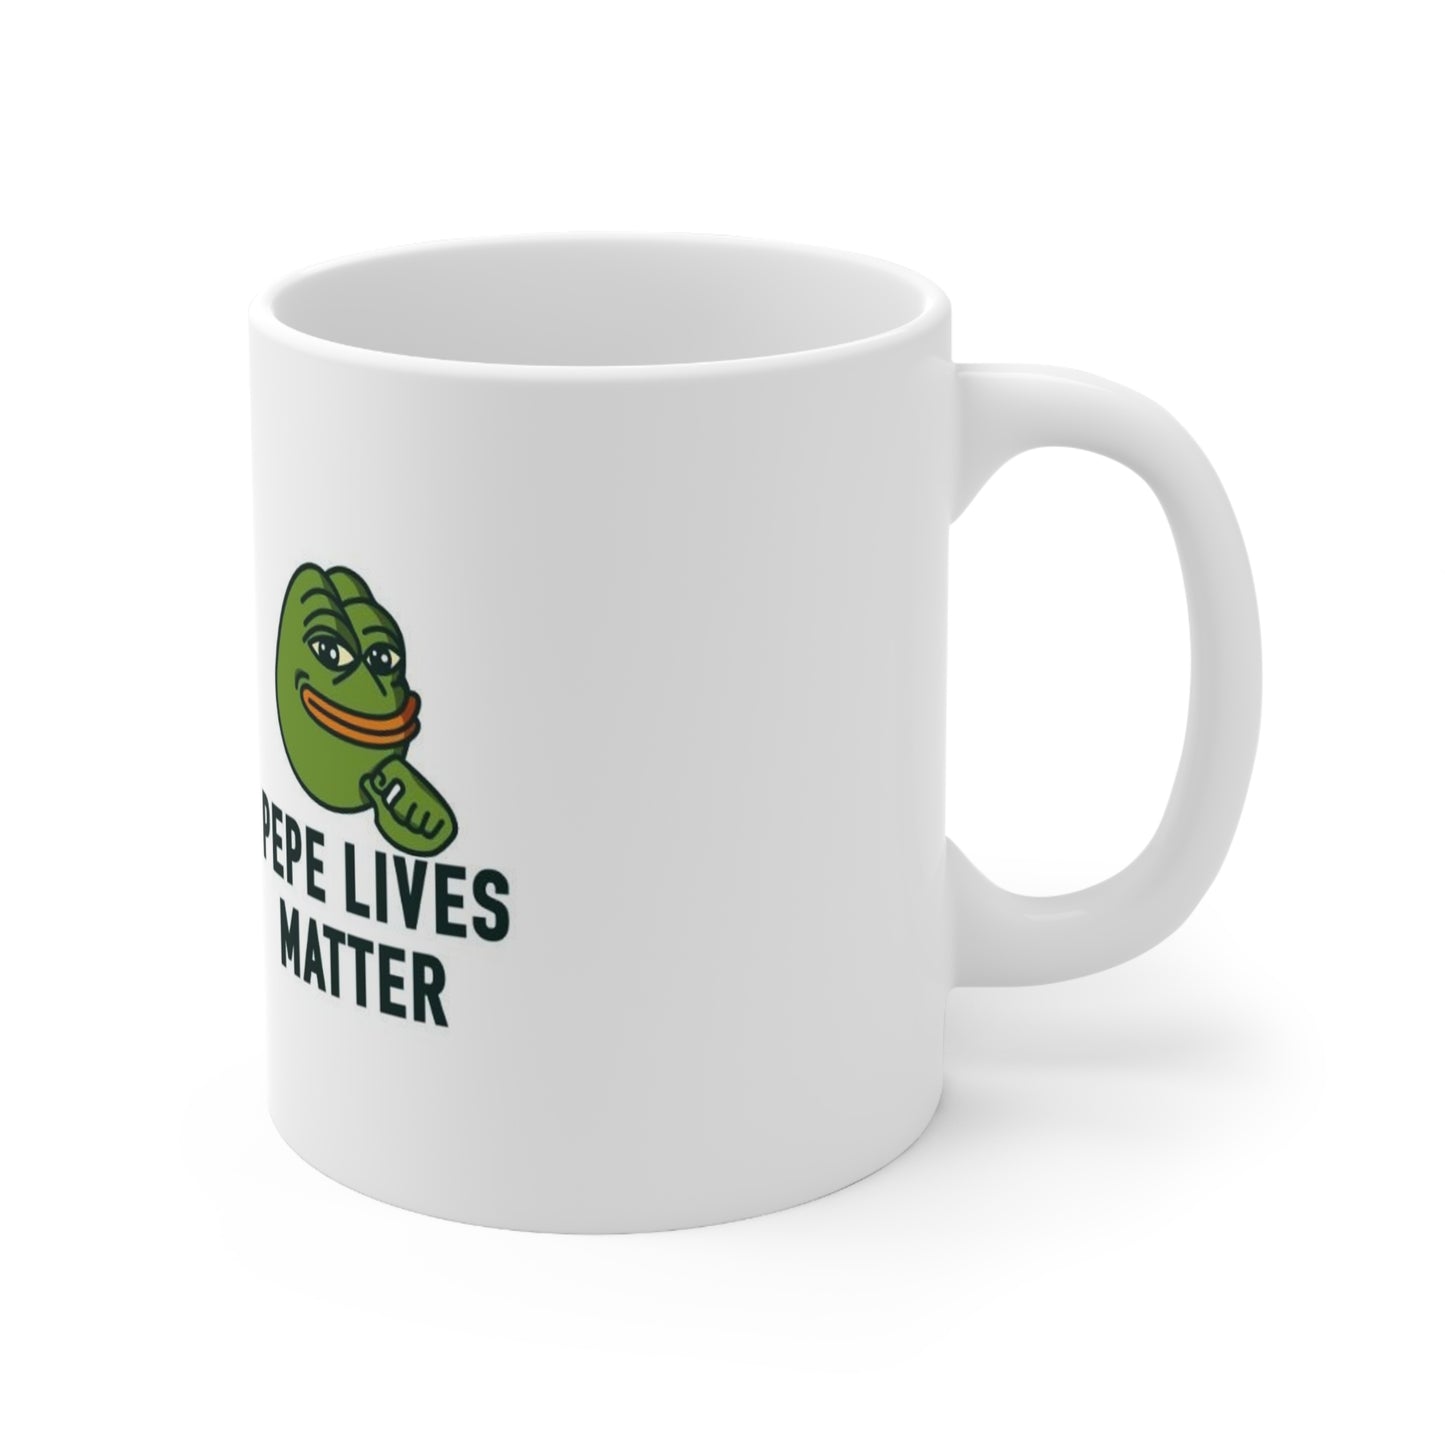 Pepe Lives Matter Mug Design 2